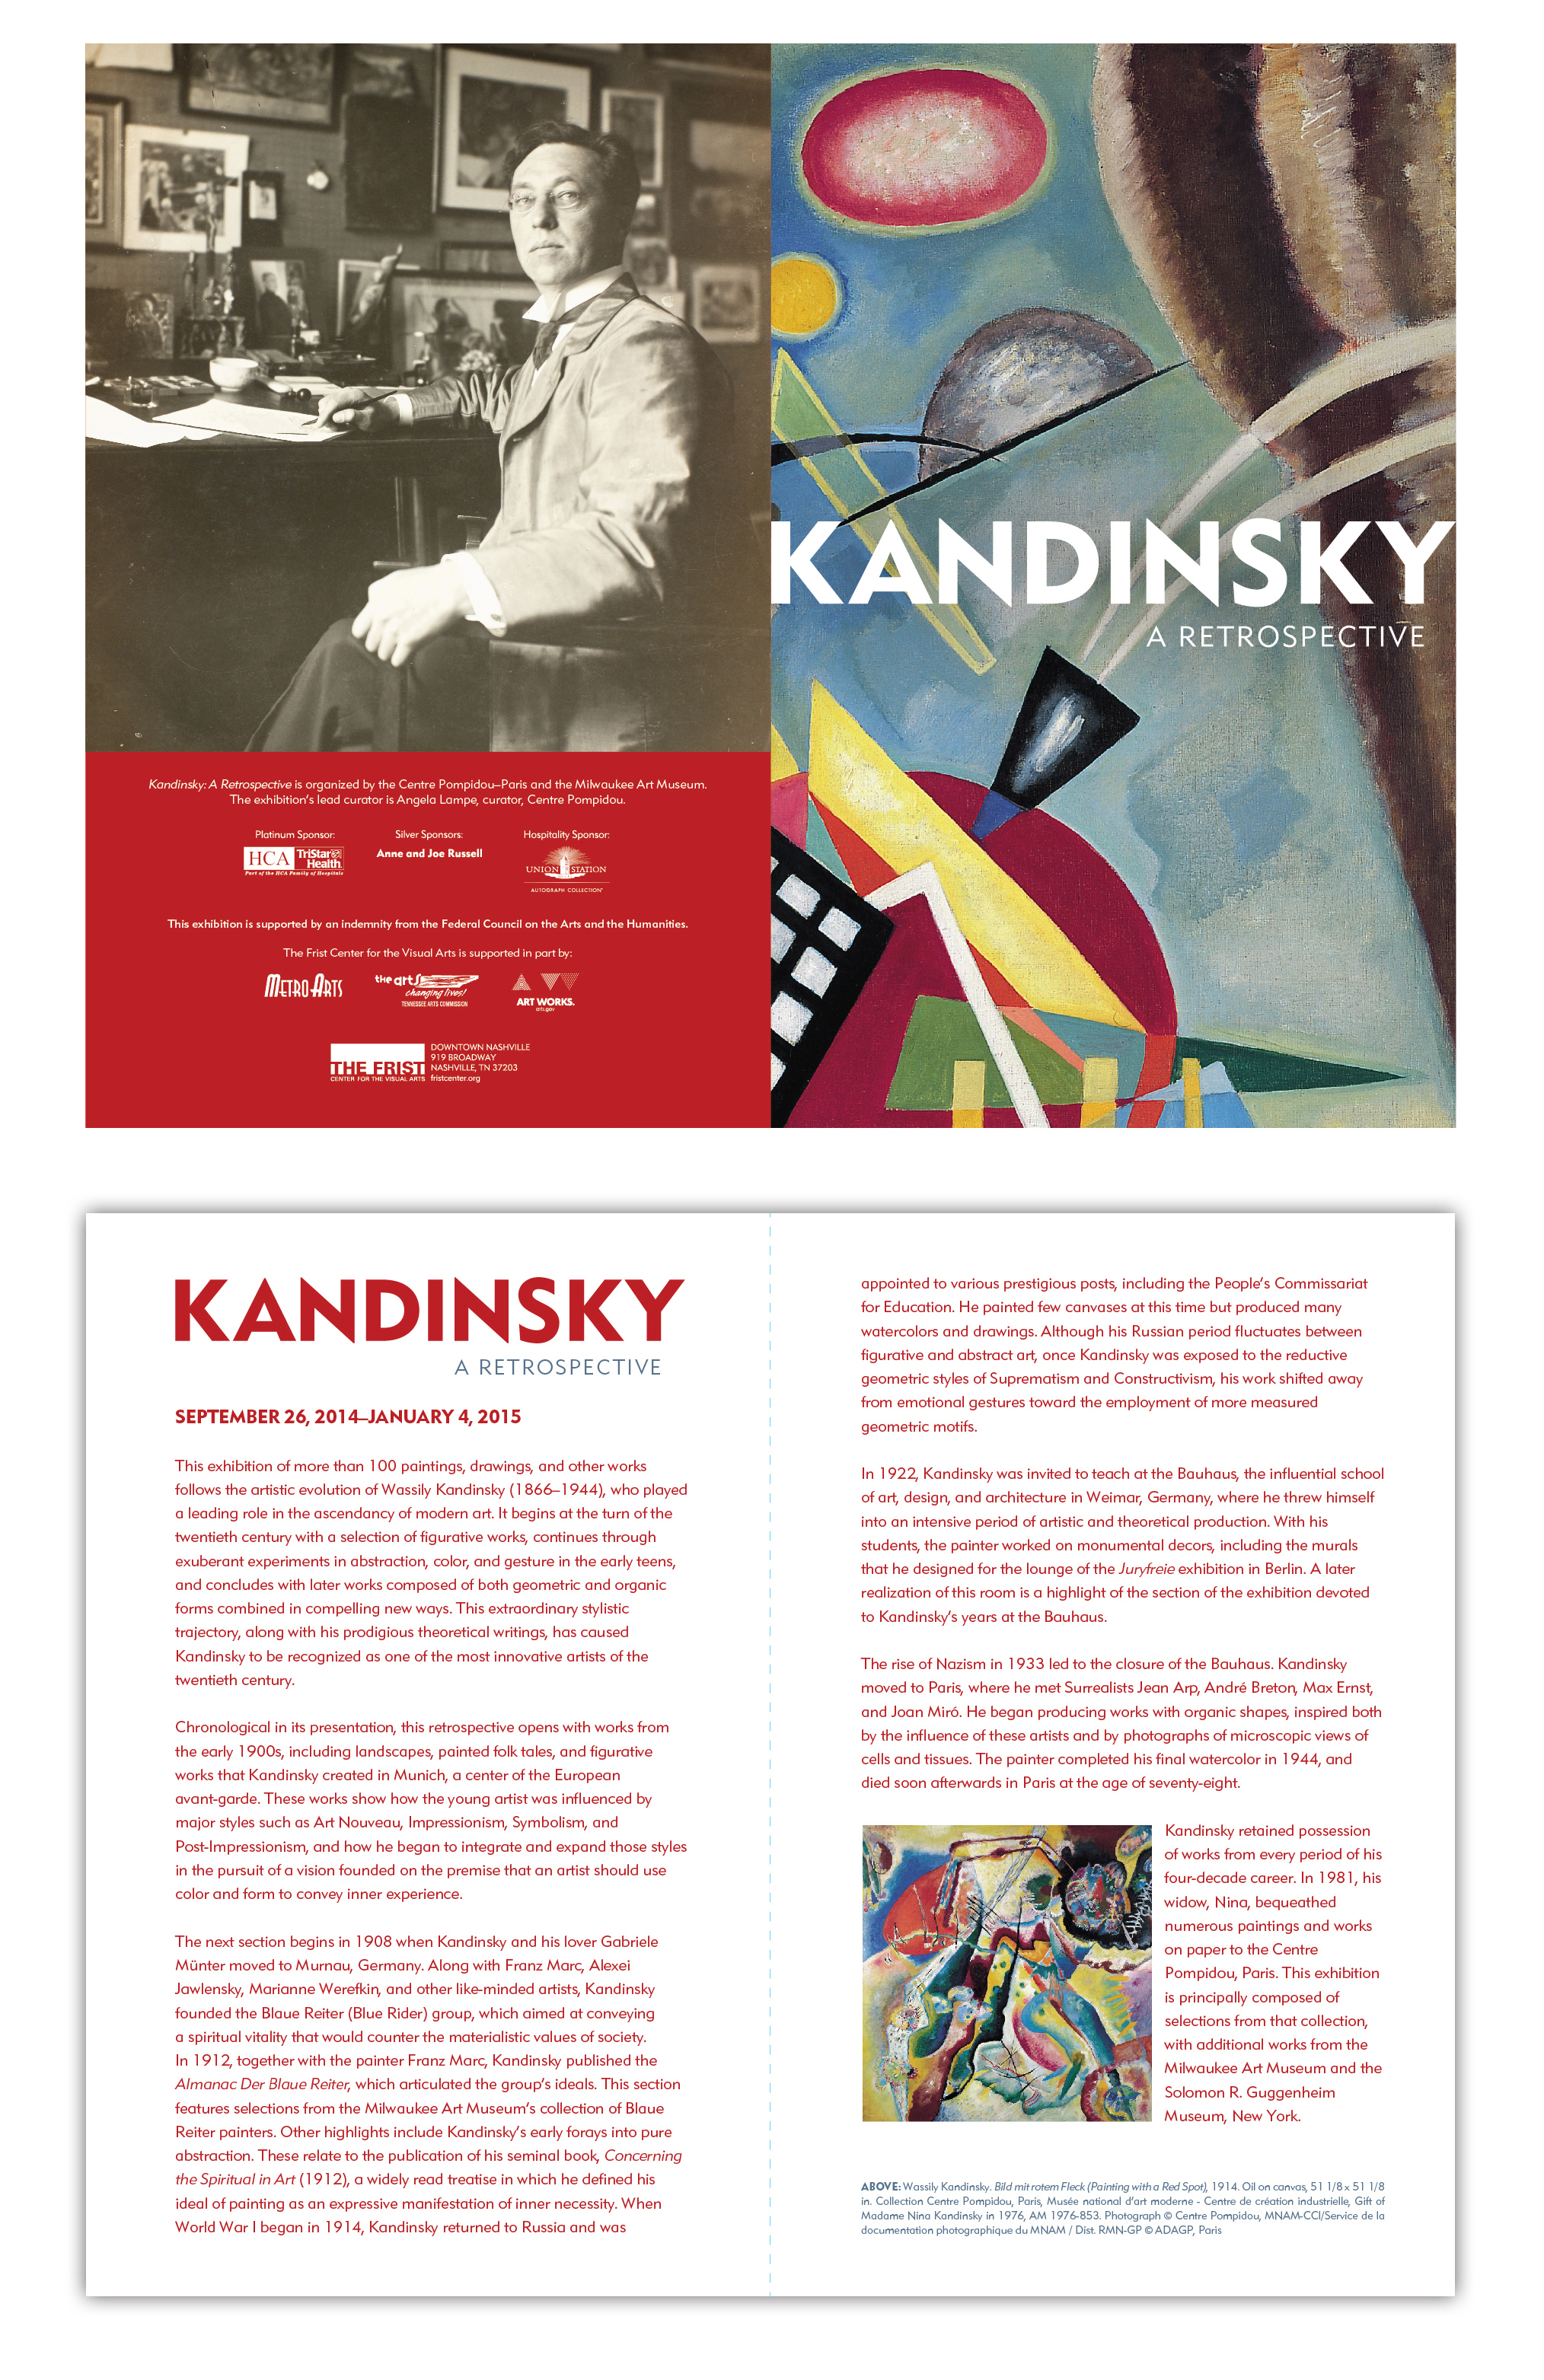 Kandinsky: A Retrospective Gallery Guide